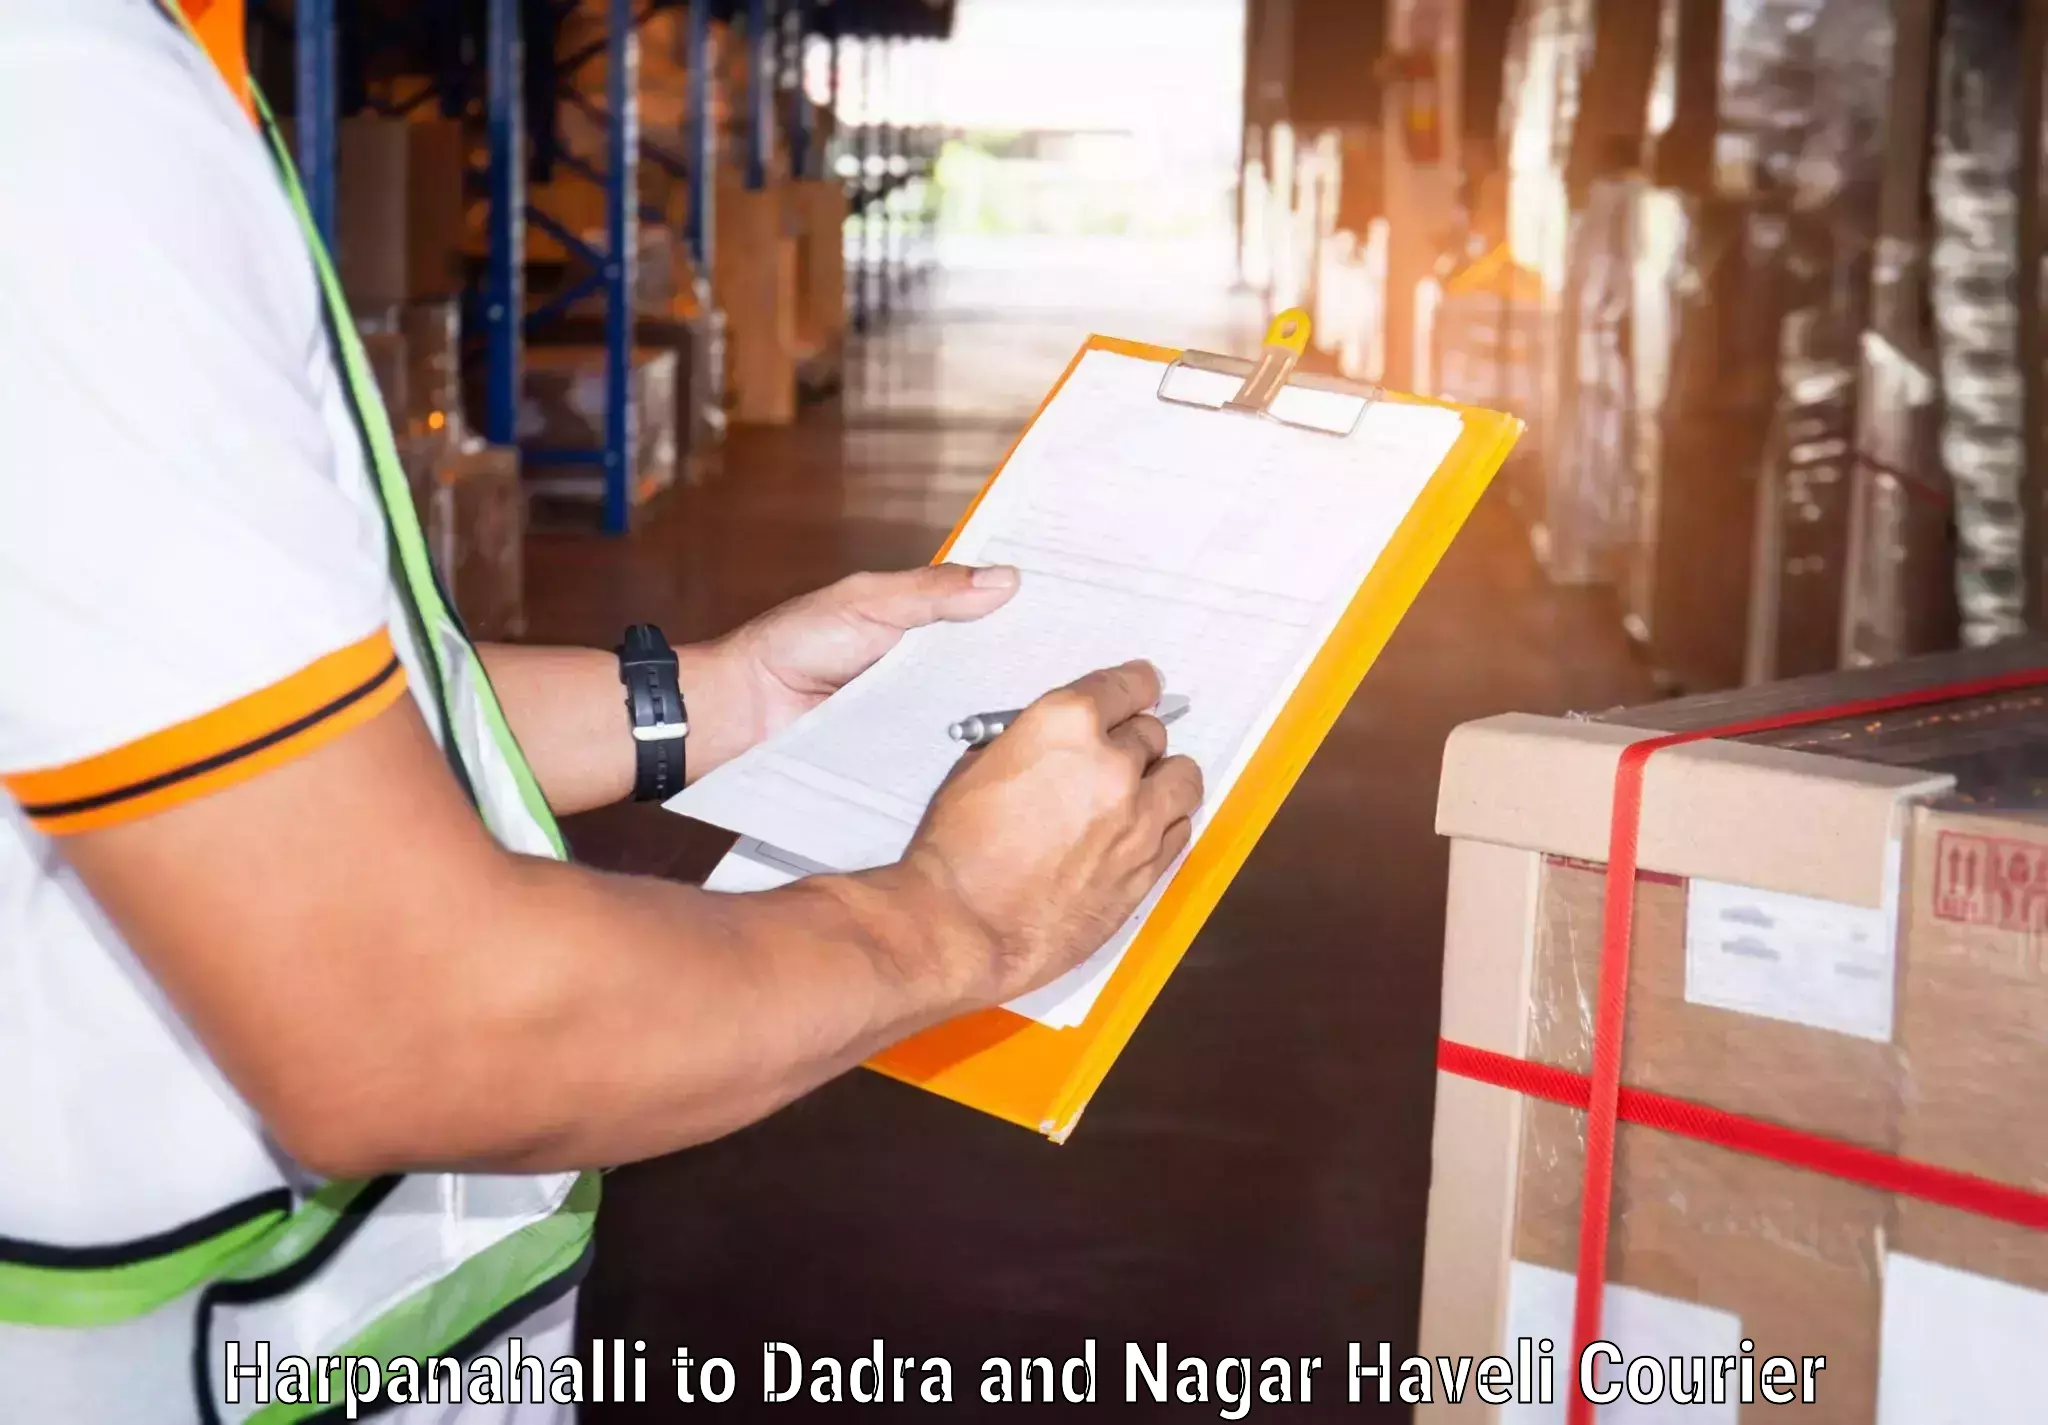 Efficient order fulfillment Harpanahalli to Dadra and Nagar Haveli